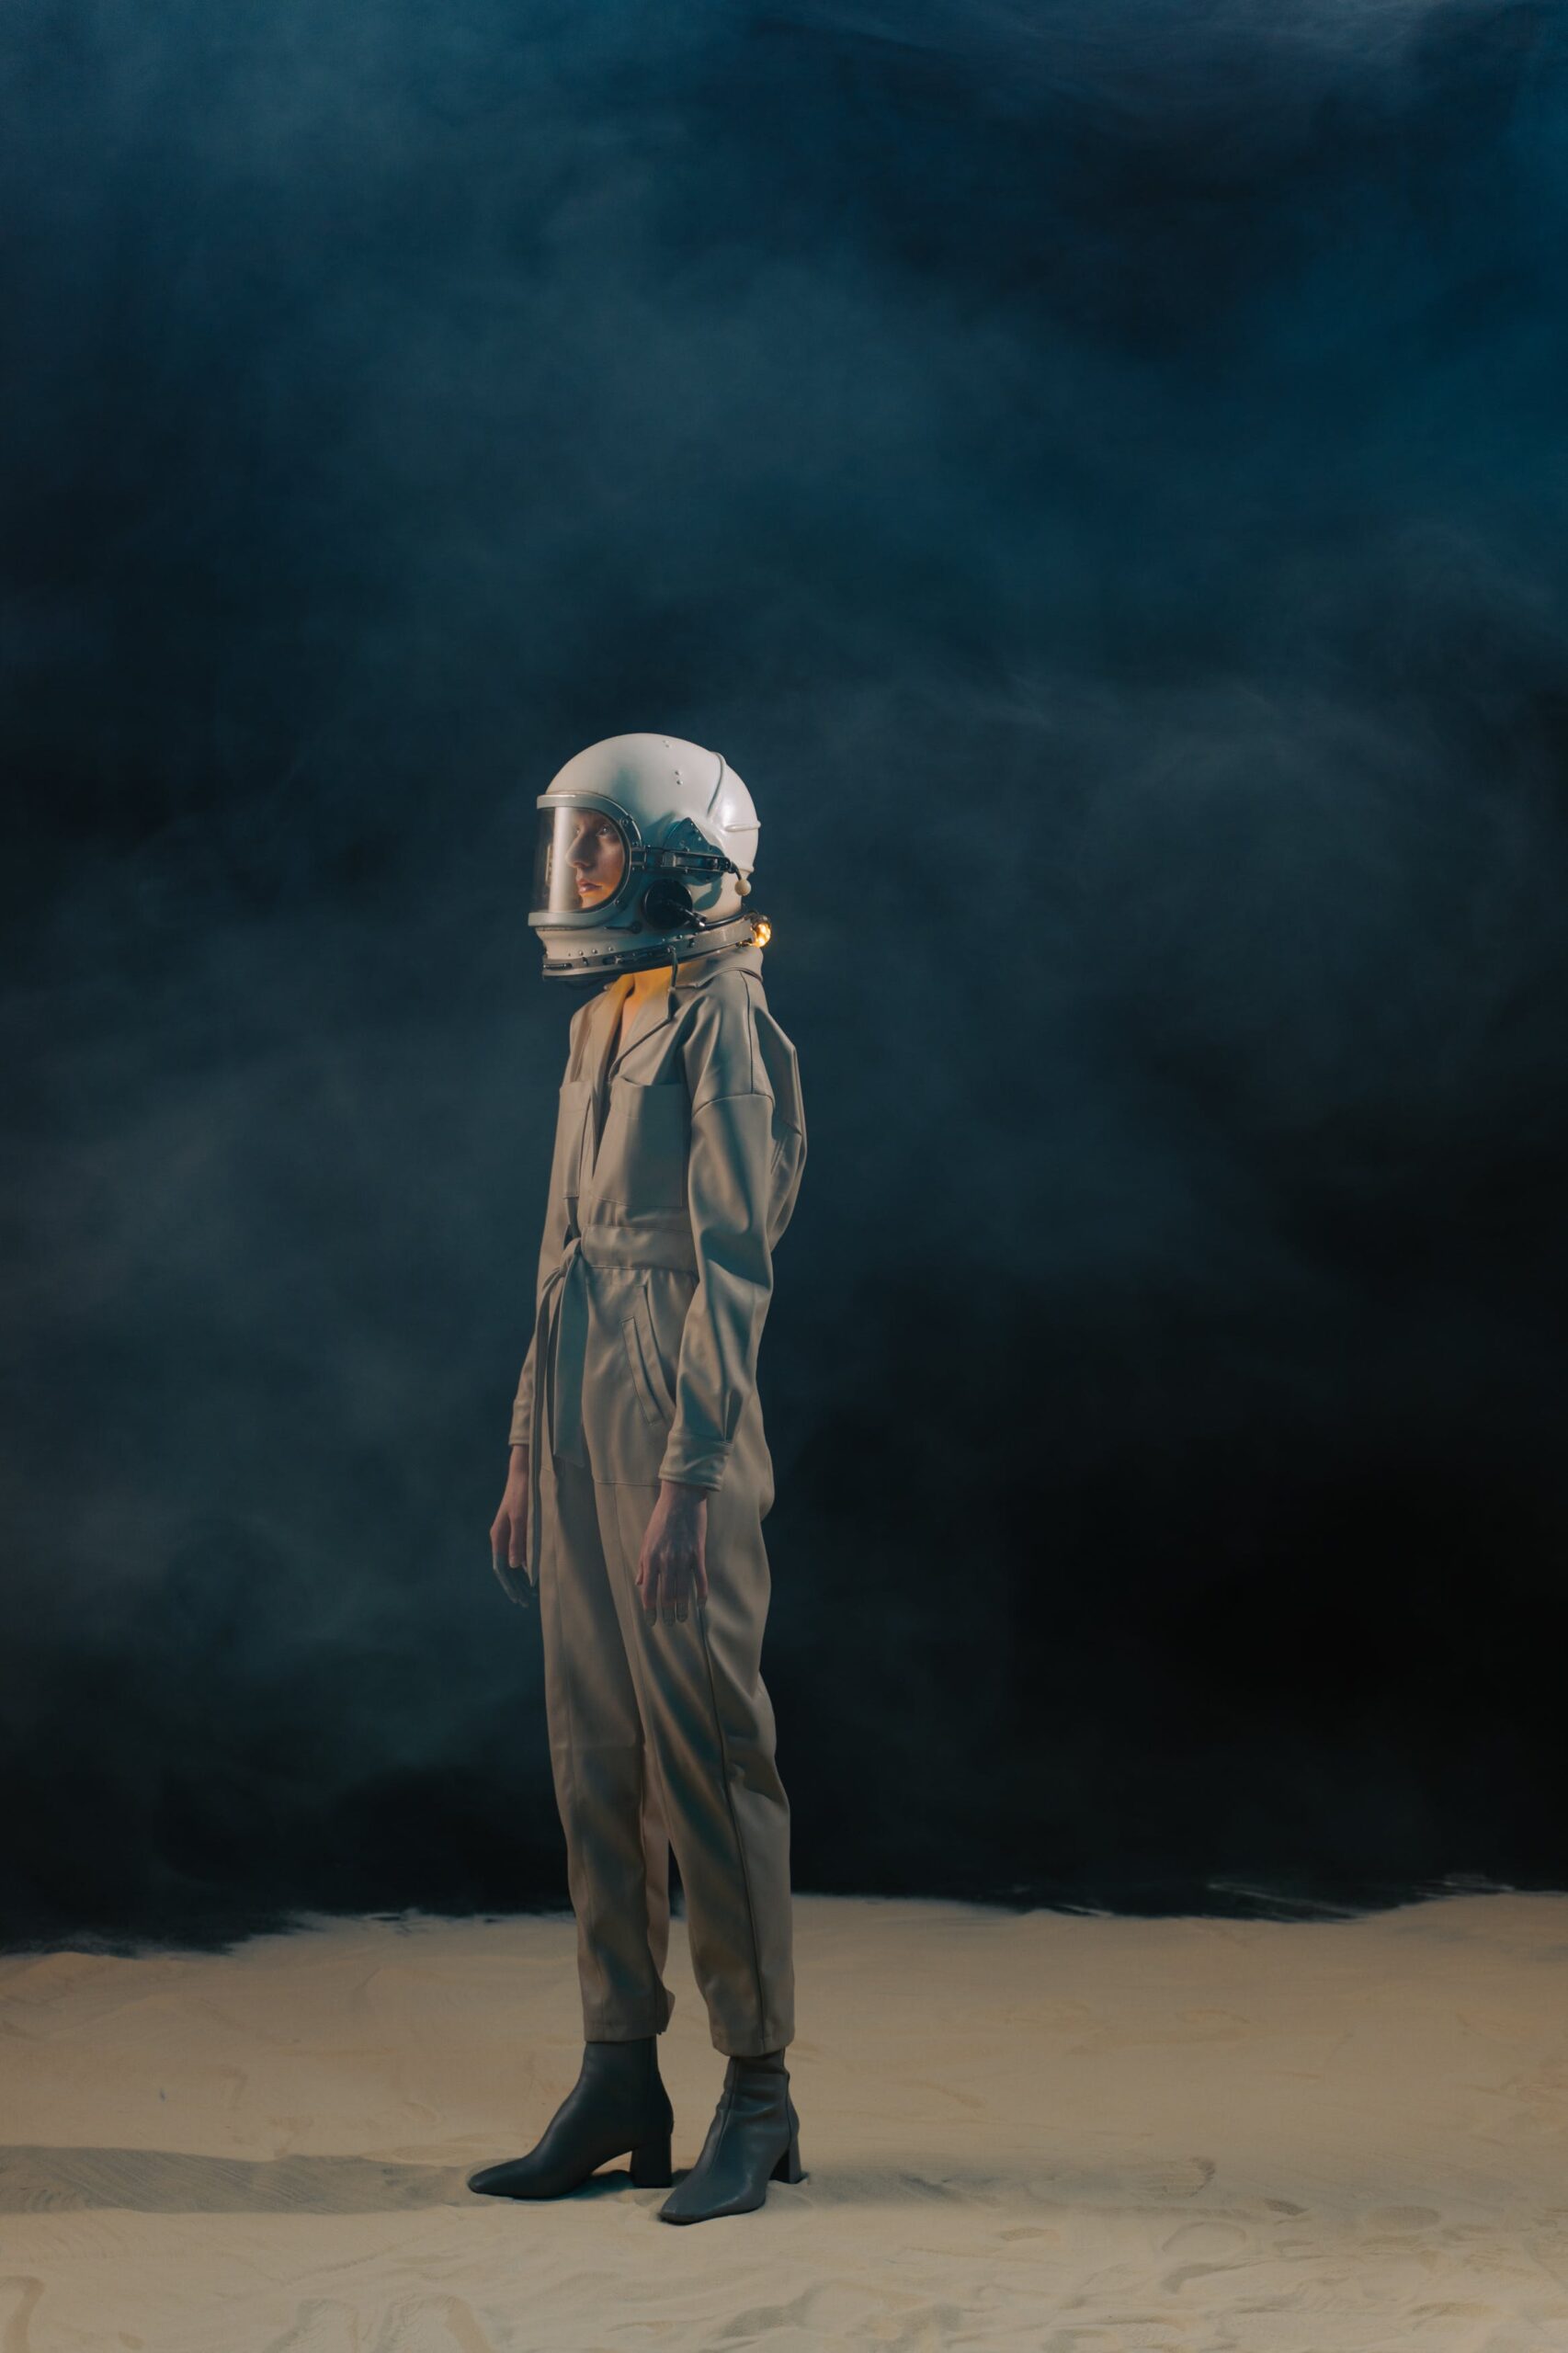 woman in astronaut suit